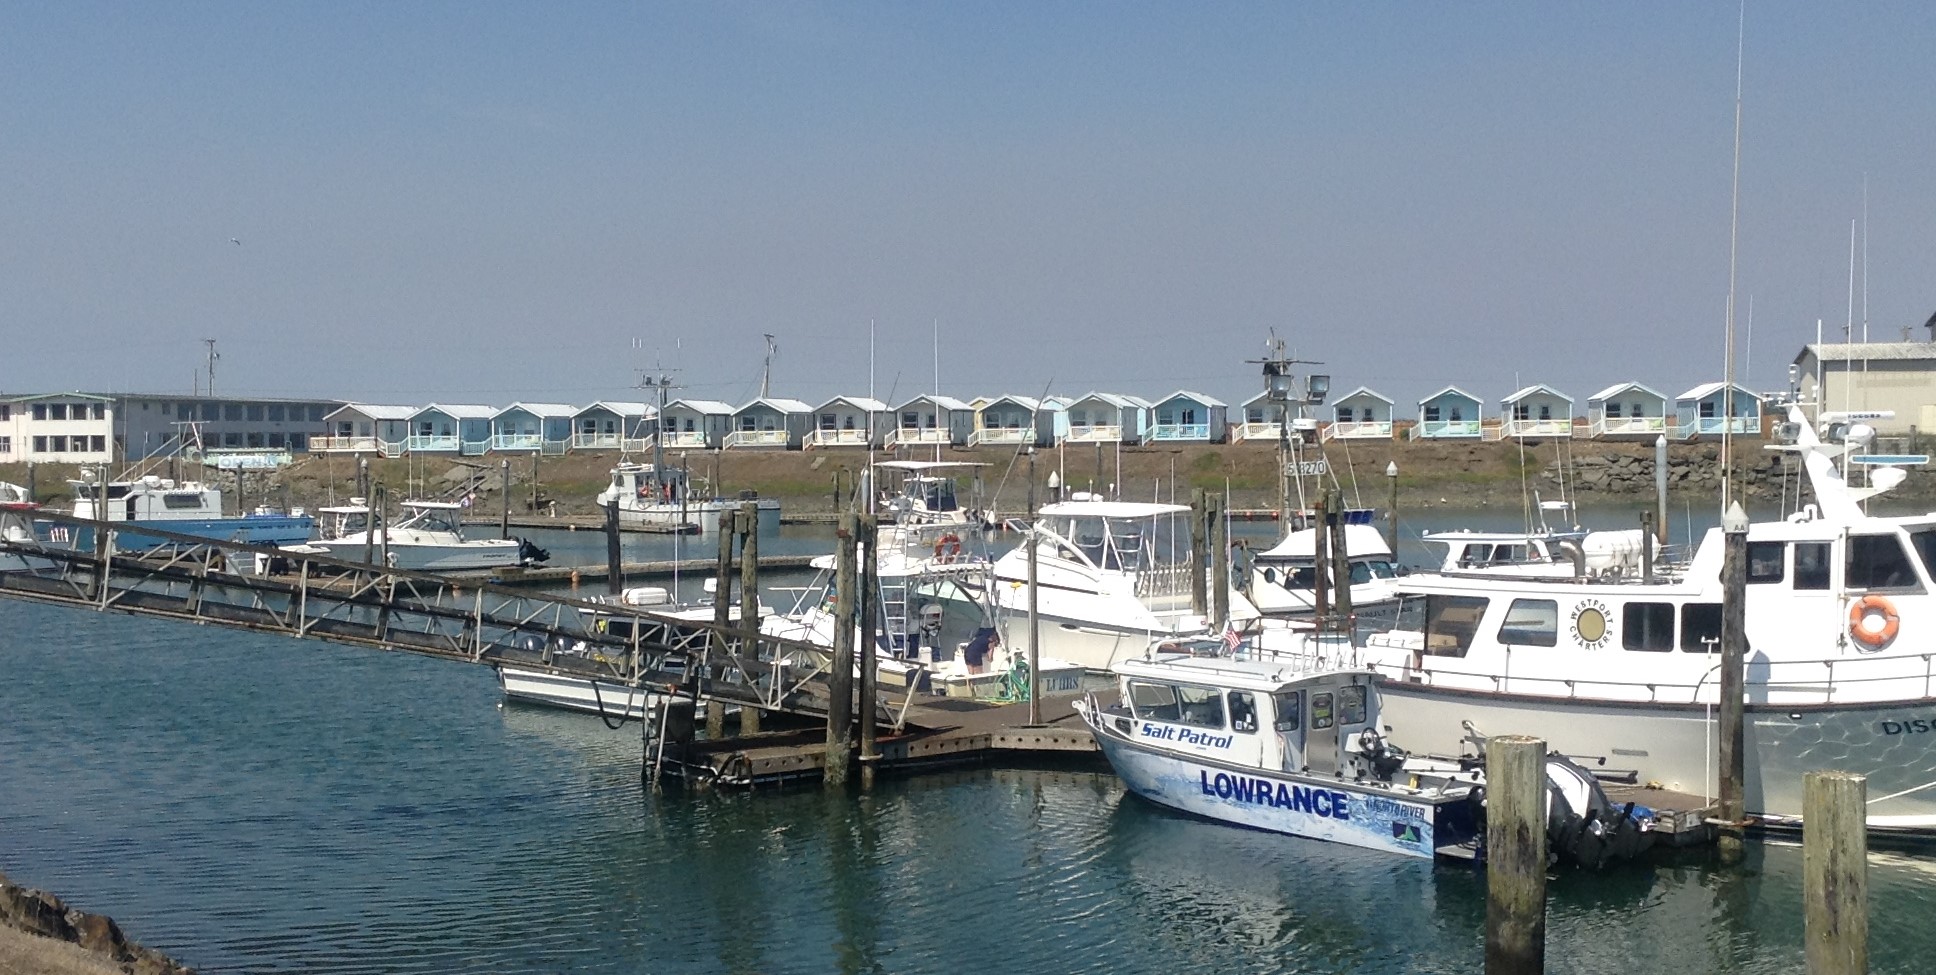 Cabins for rent overlooking the Westport Marina in Westport WA #graysharborbeaches #Westportwamarina